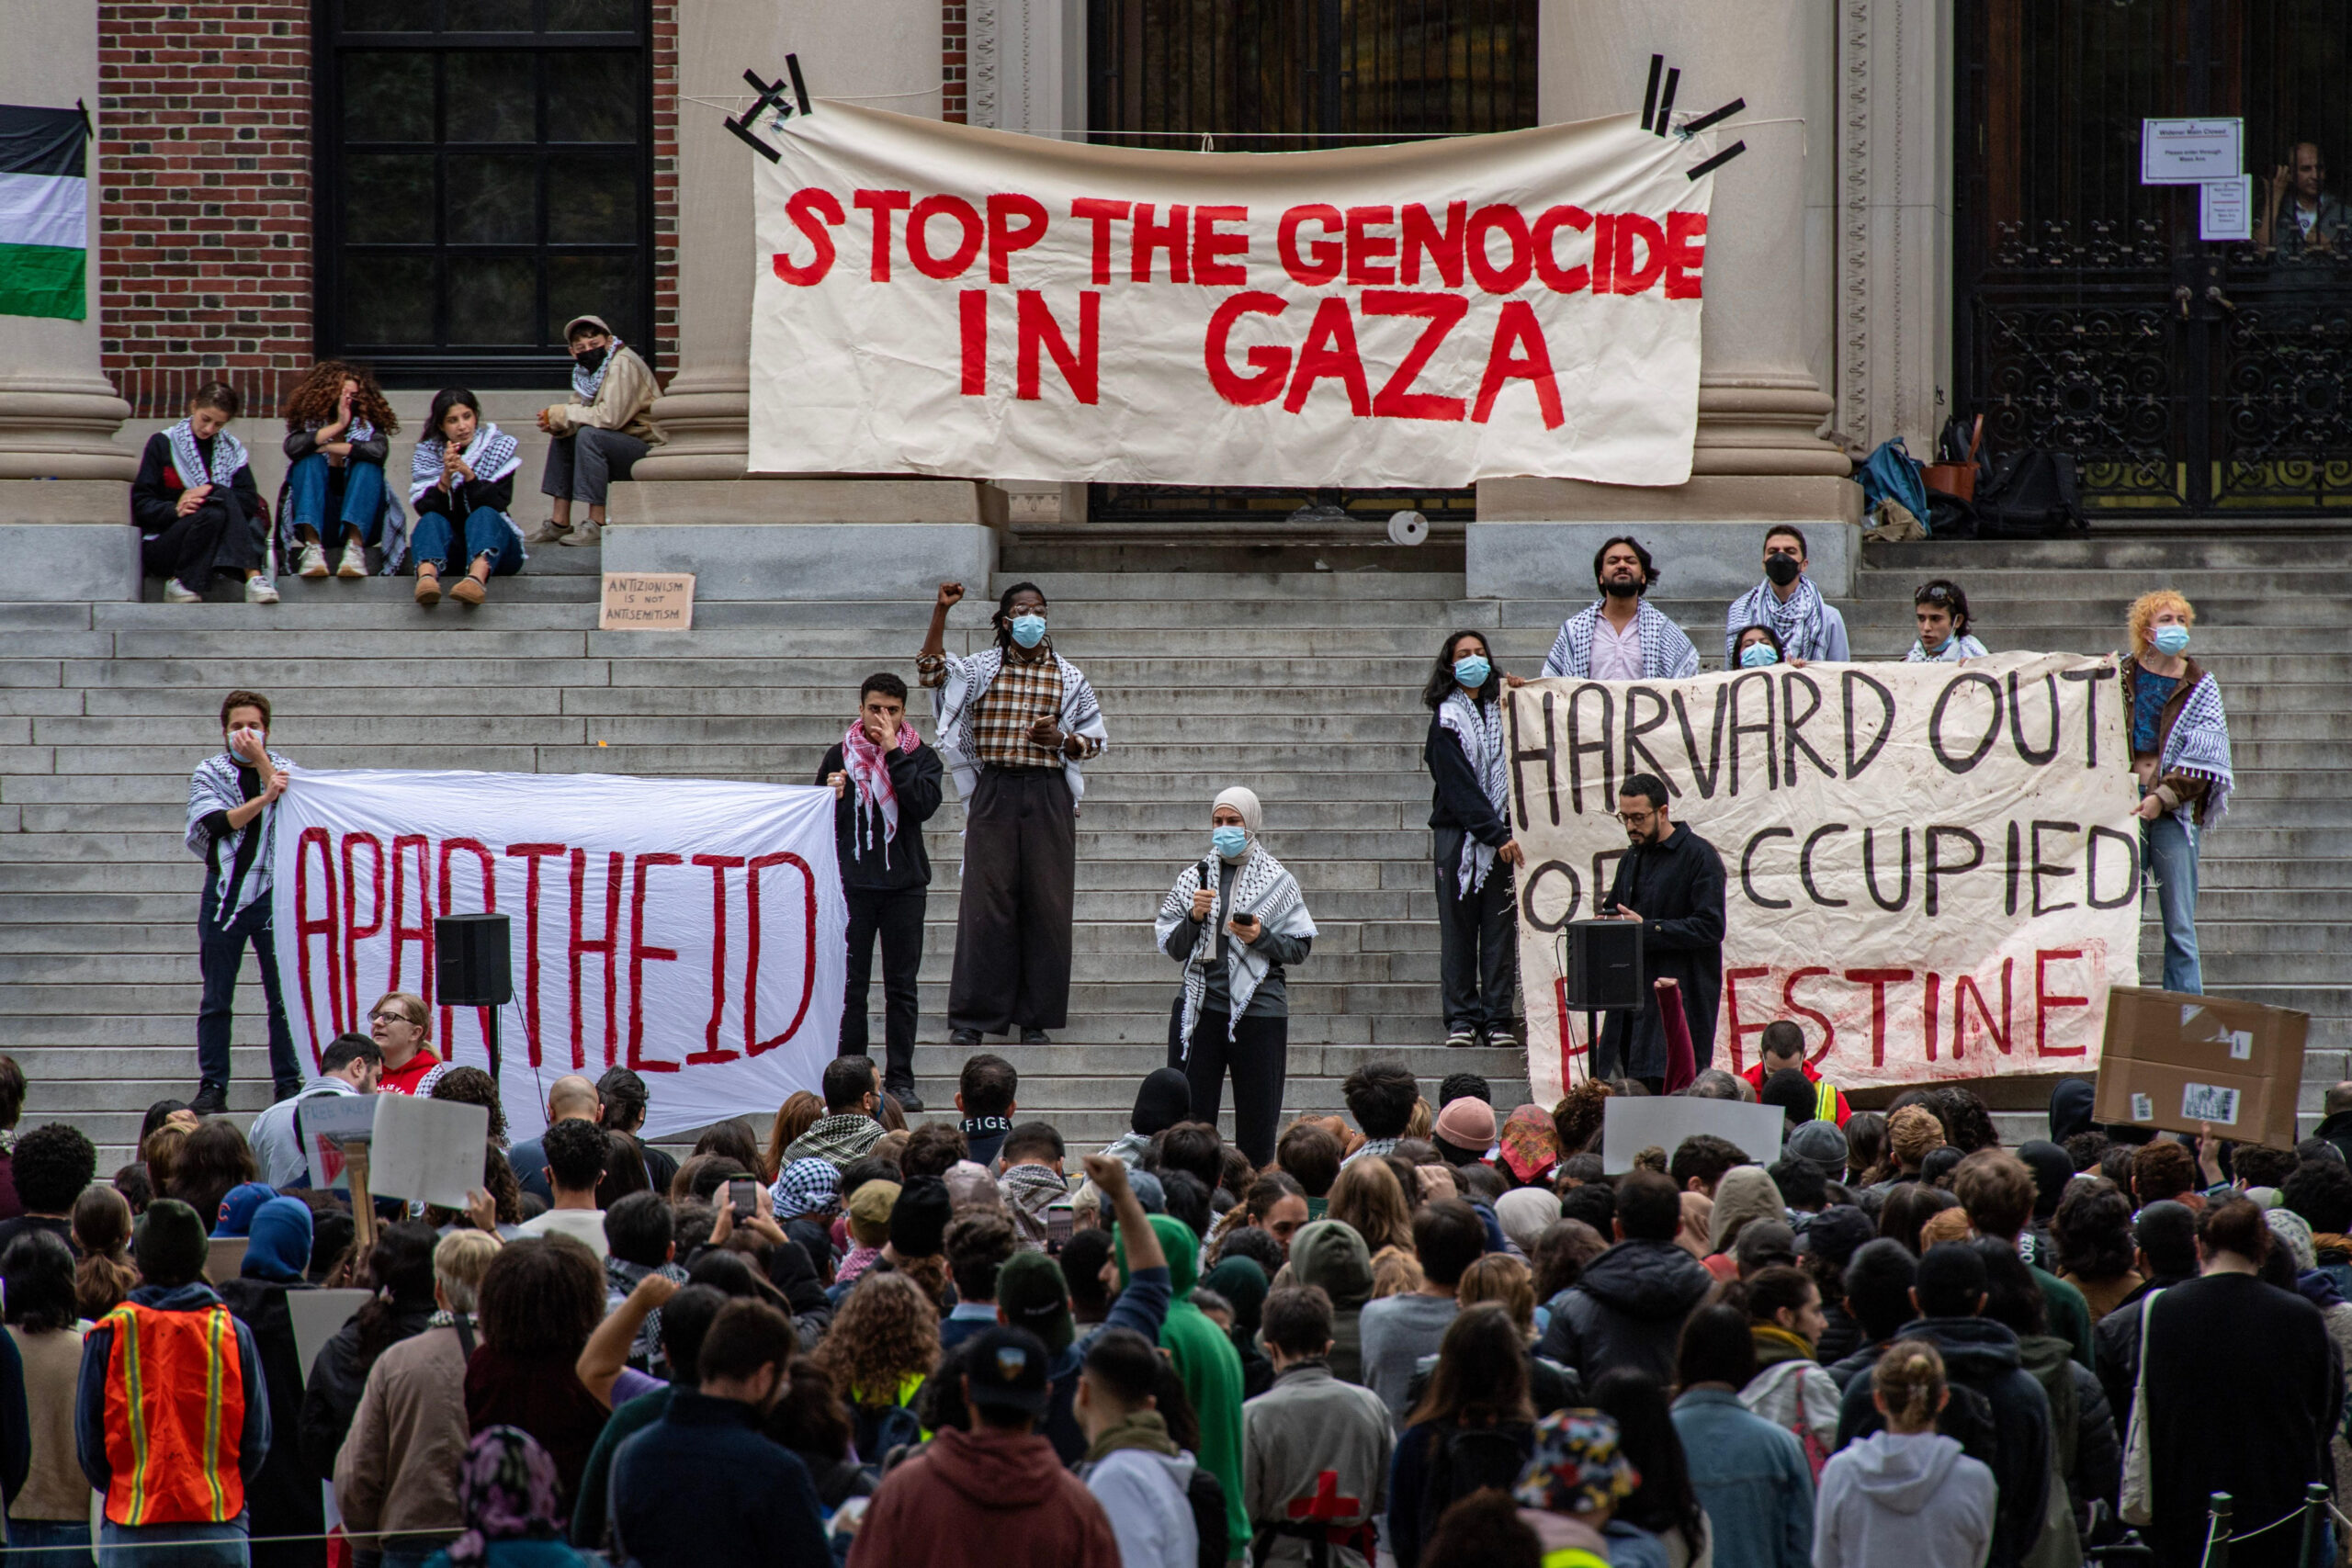 Free Palestine protest at Harvard